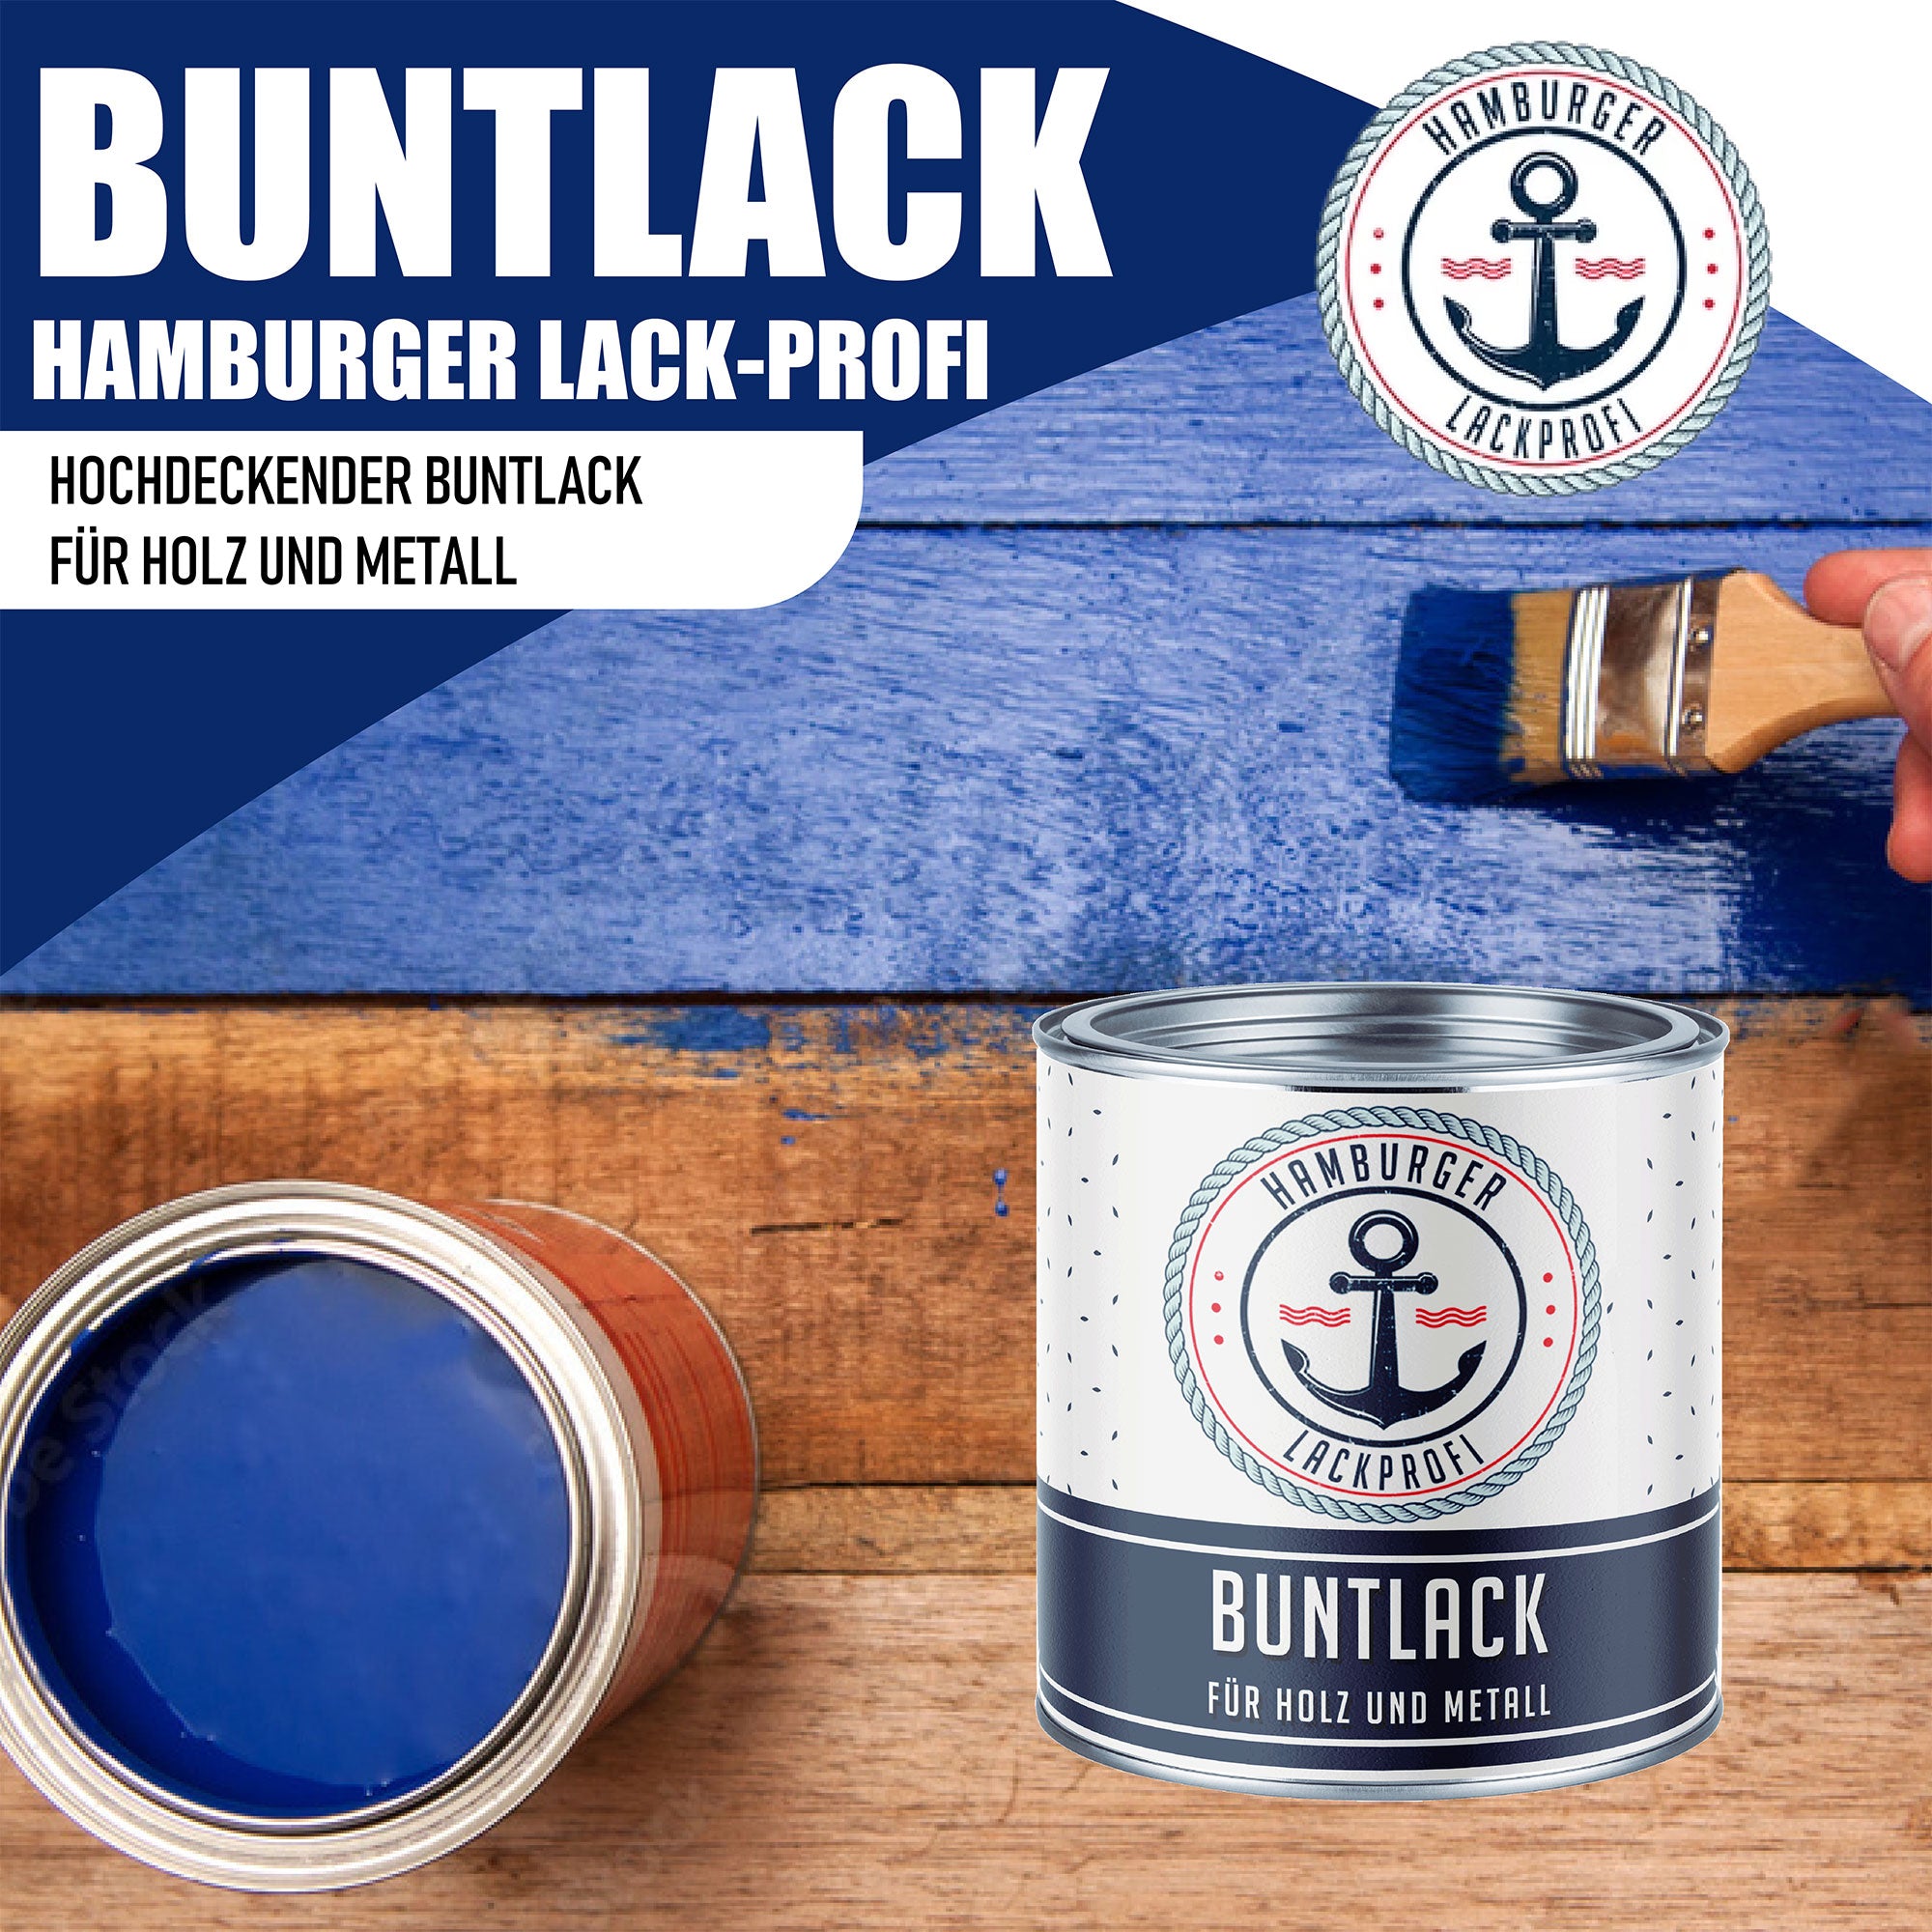 Hamburger Lack-Profi Buntlack in Braunrot RAL 3011 mit Lackierset (X300) & Verdünnung (1 L) - 30% Sparangebot